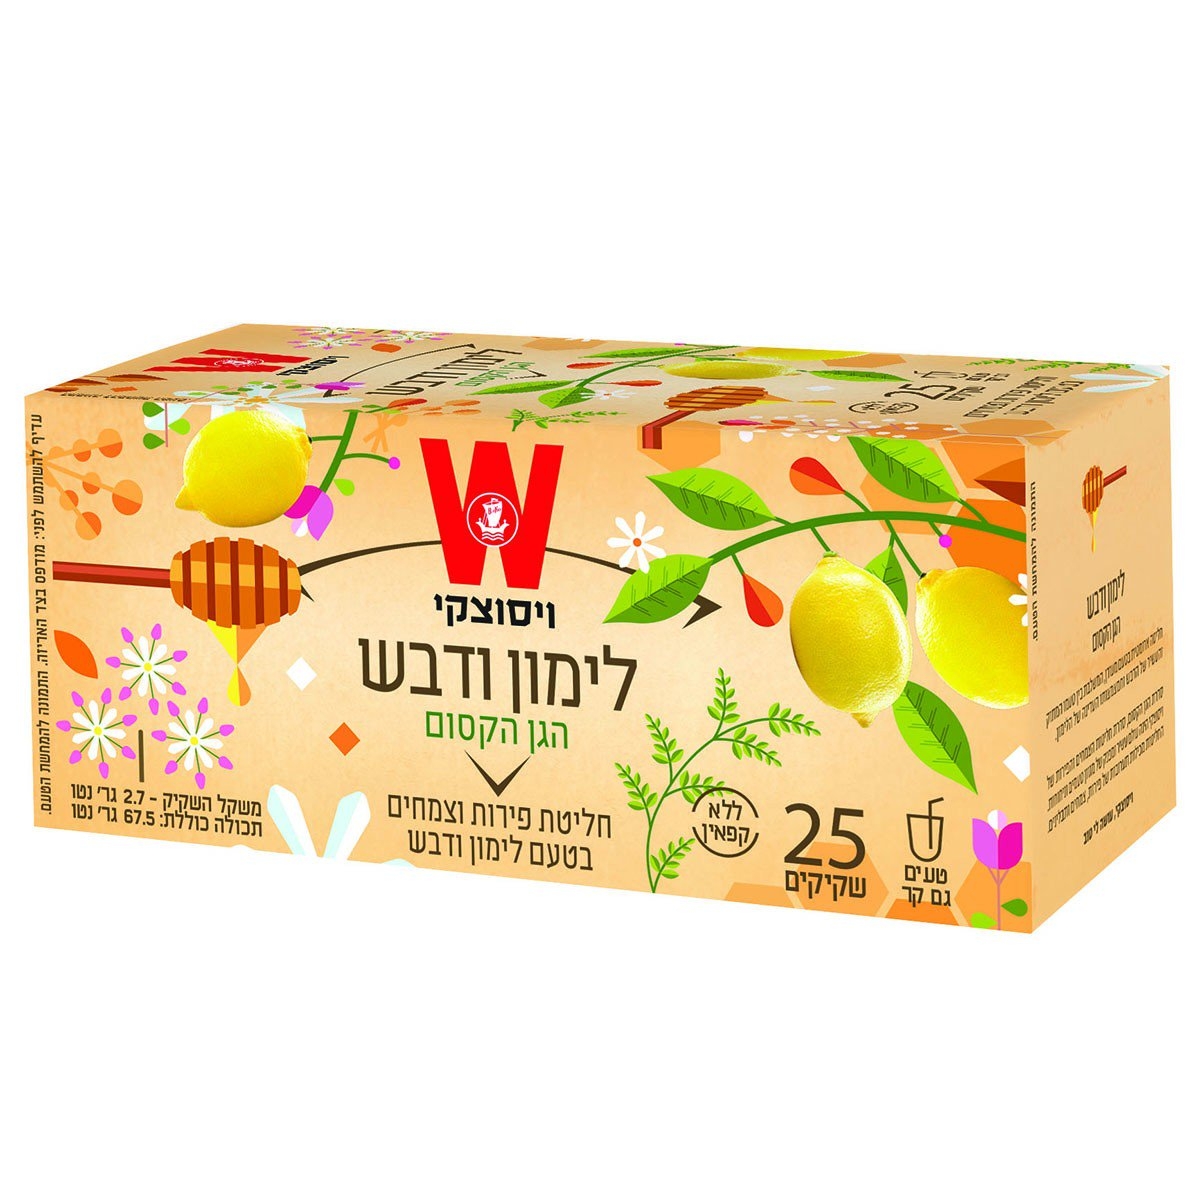 Lemon and Honey Tea From Wissotzky - 1